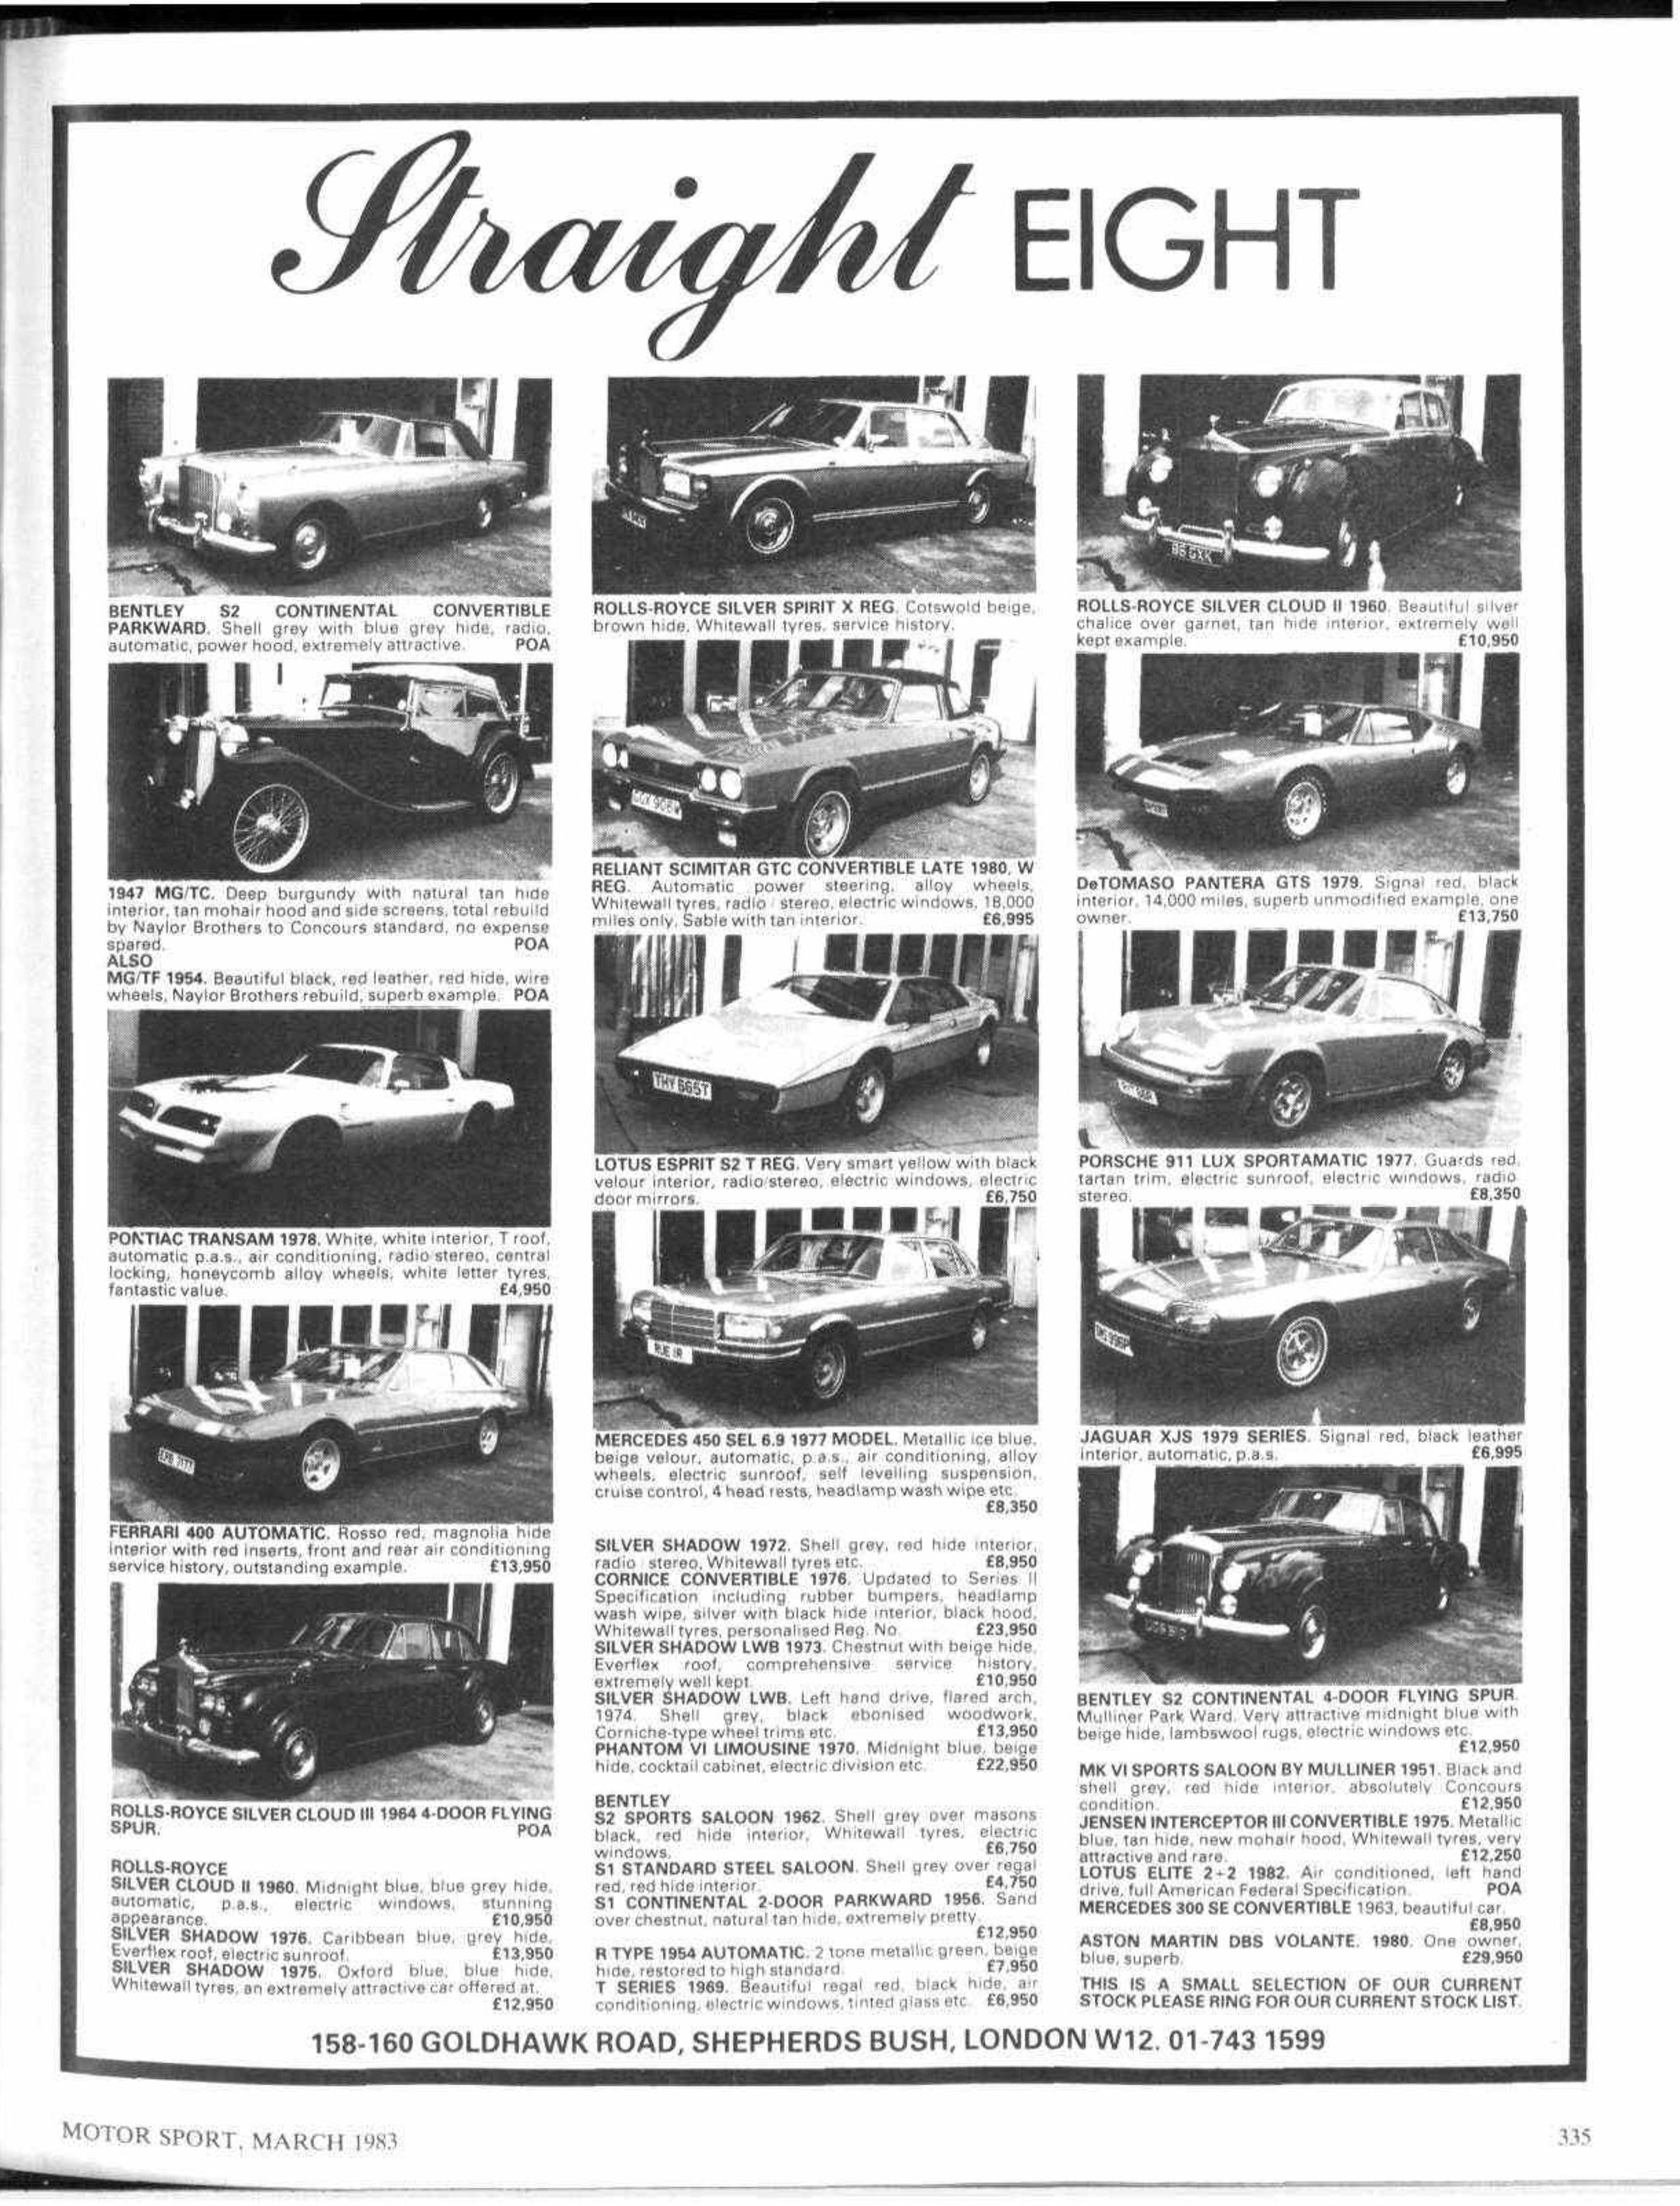 Austin Maestro - Classic Car Review - Timeline